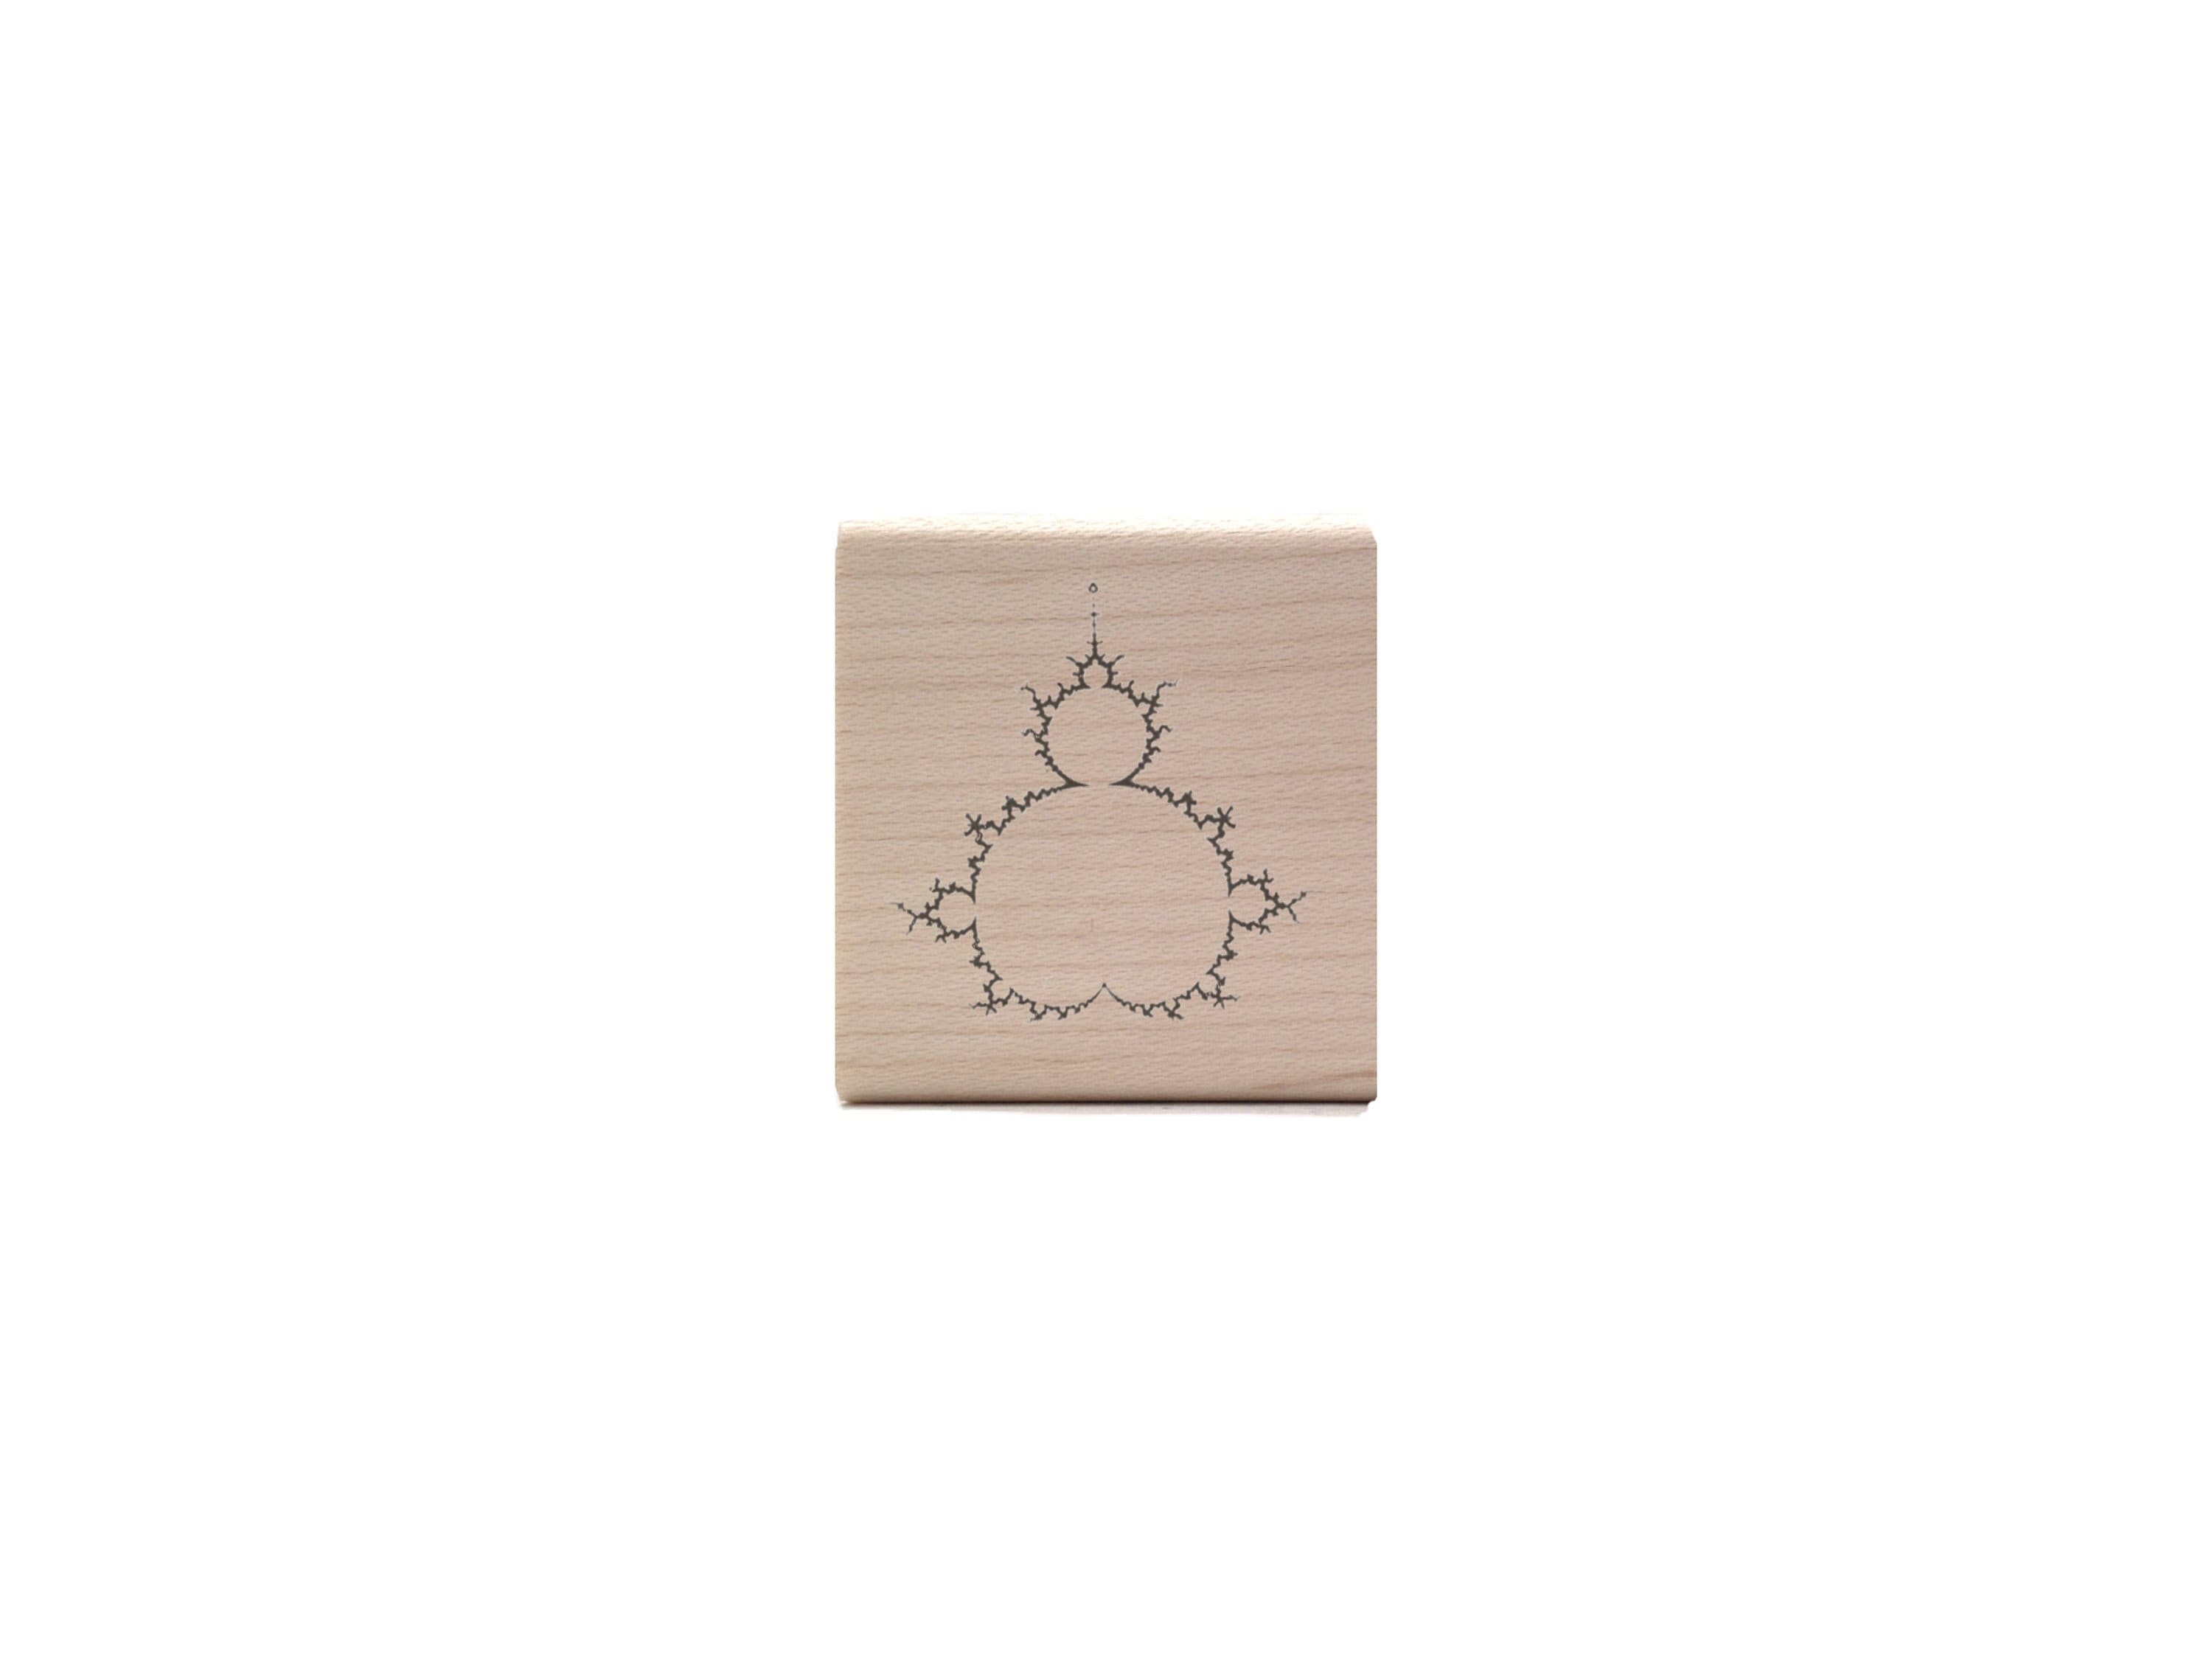 Mandelbrot Fractal Rubber Stamp - Sacred Geometry - Koch Snowflake & Sierpinki Triangle